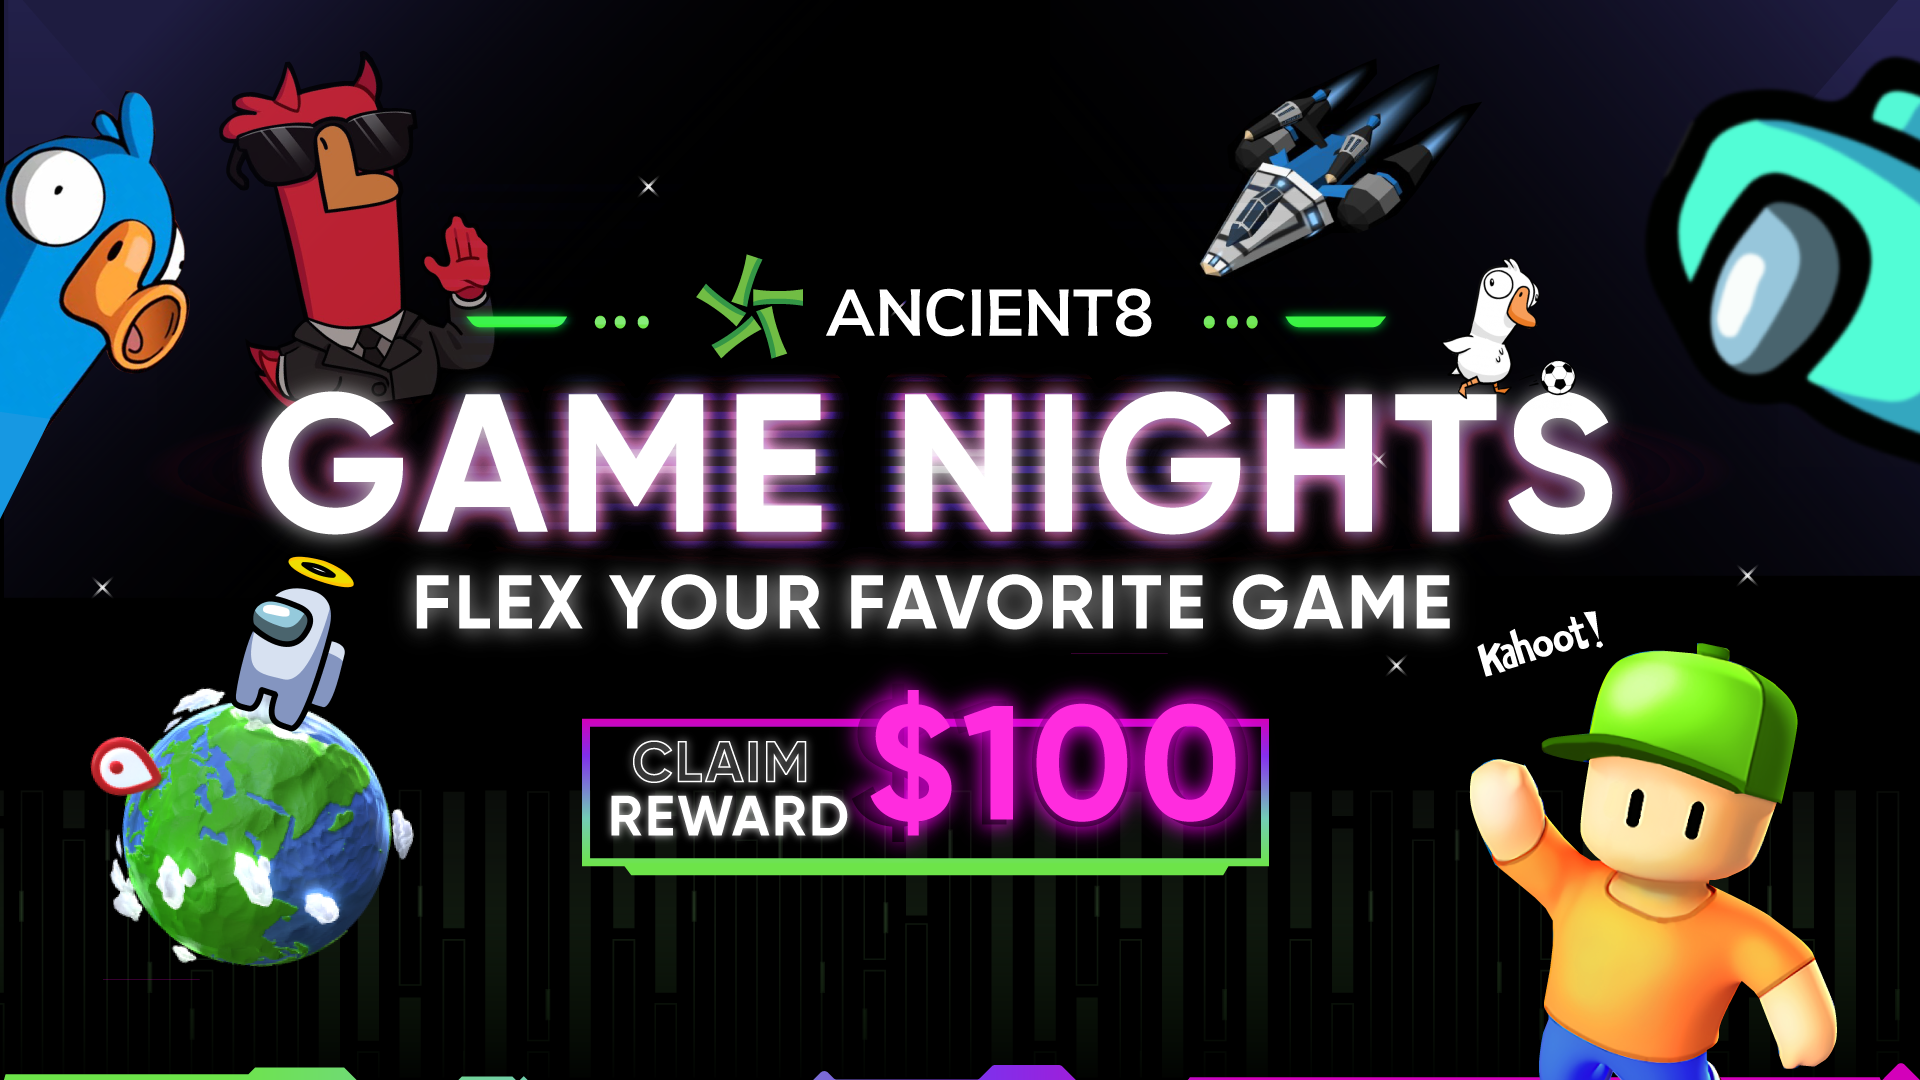 Ancient8 Game Night - Flex Your Favorite Game, Reward of $100